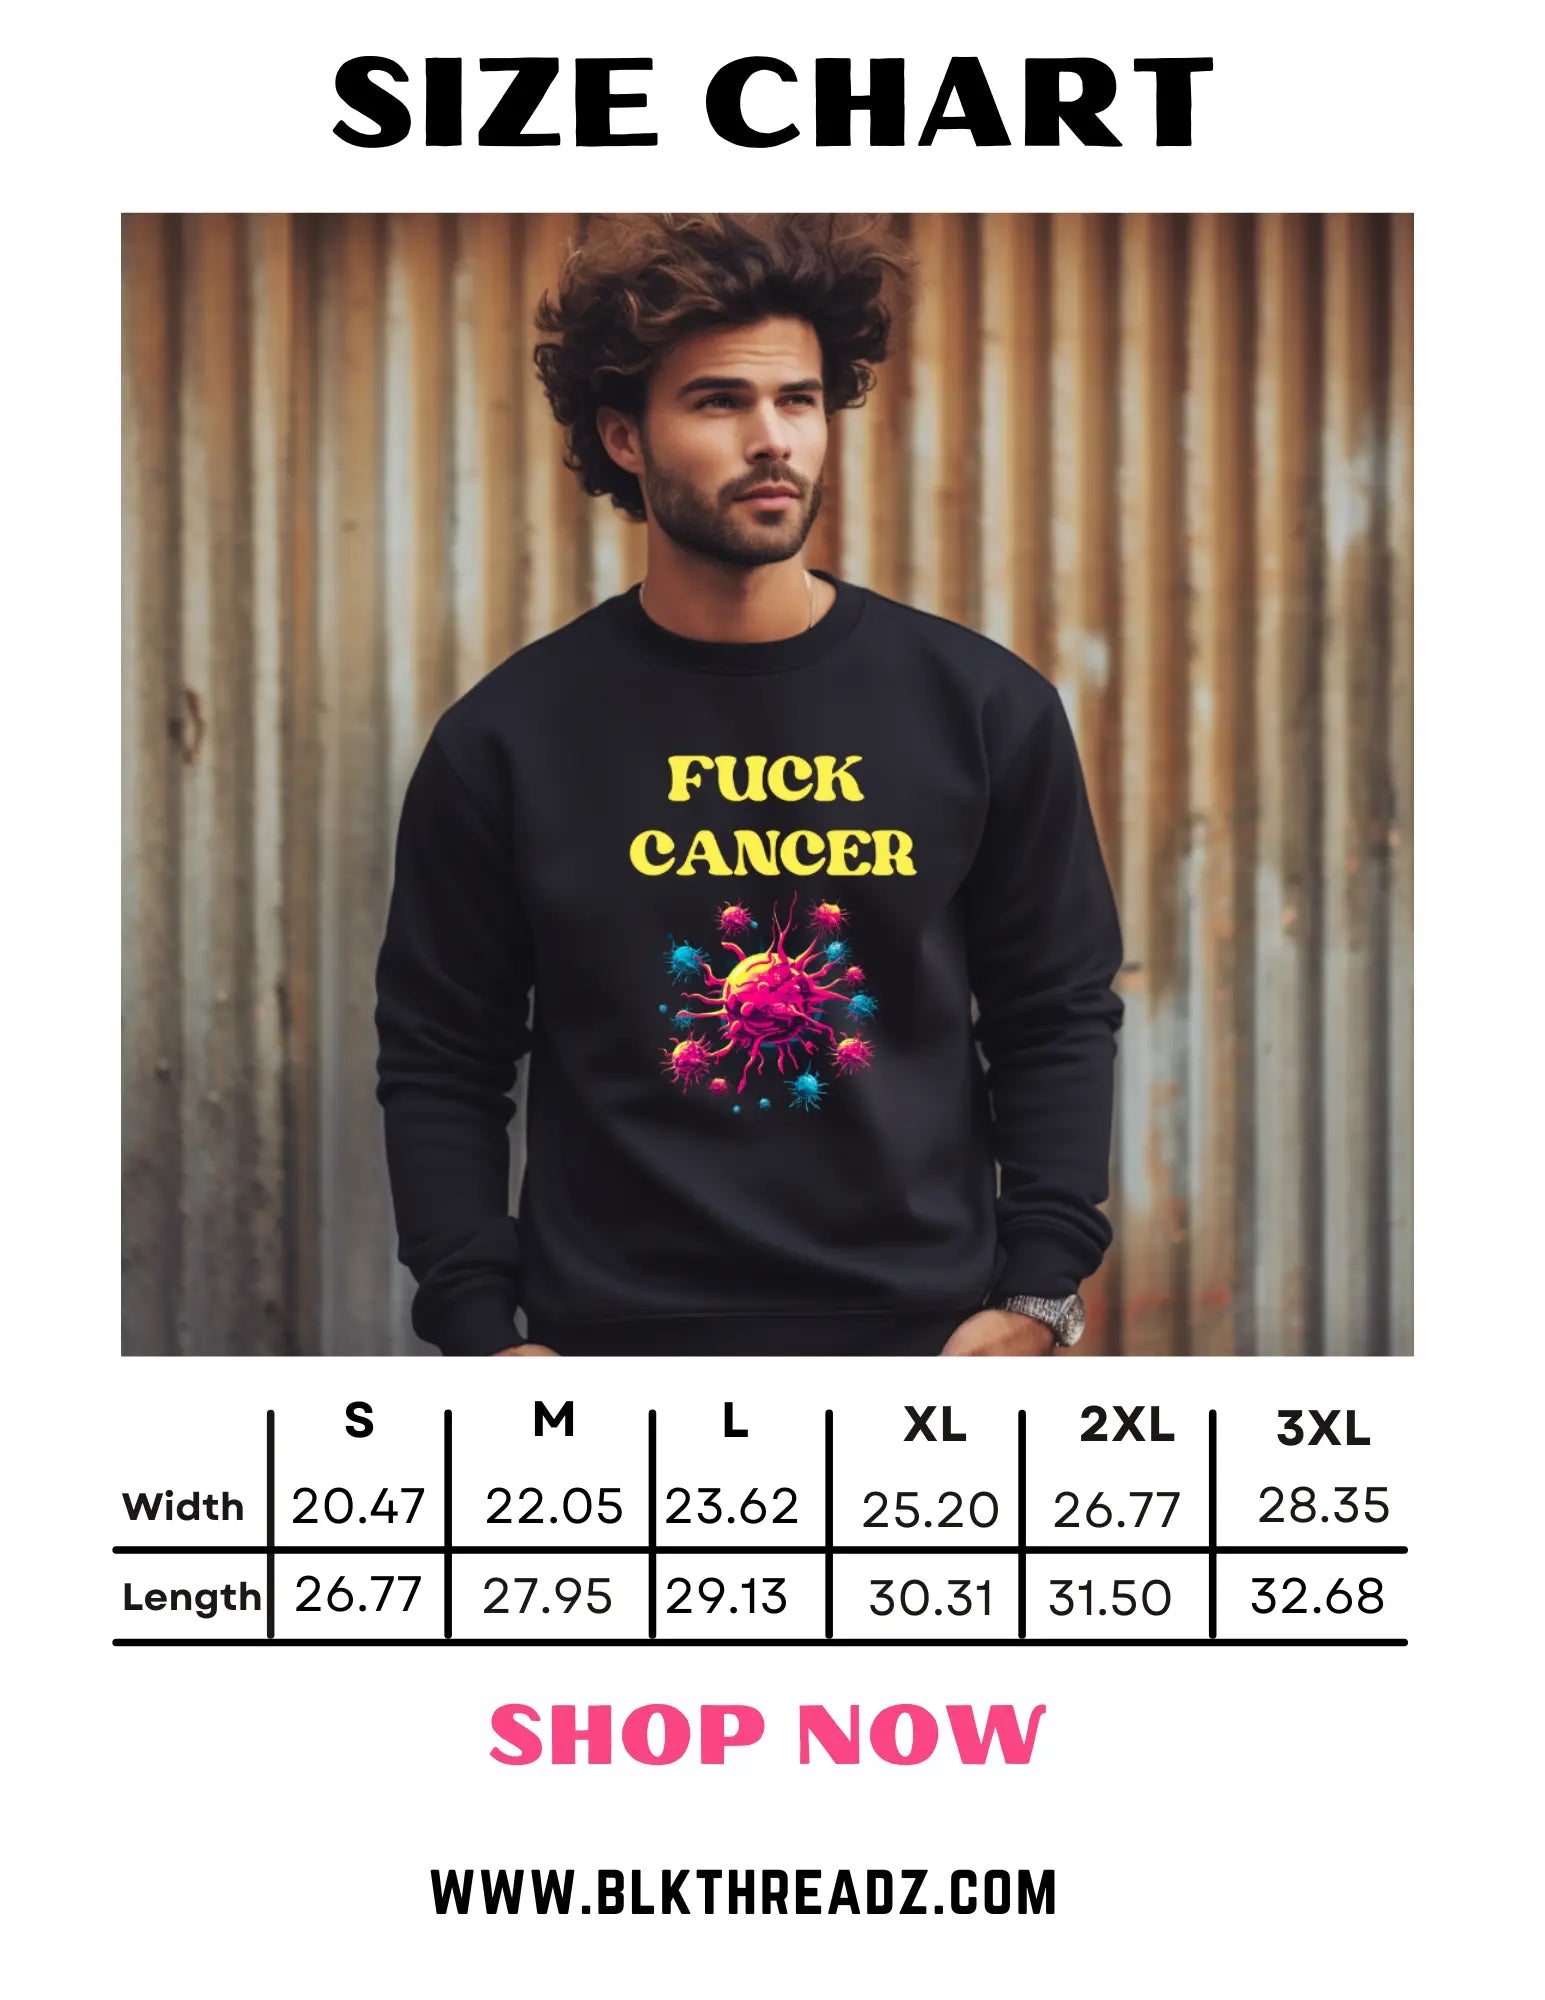 Ass Eating Champ: Funny Humorous Sweatshirt - Black Threadz